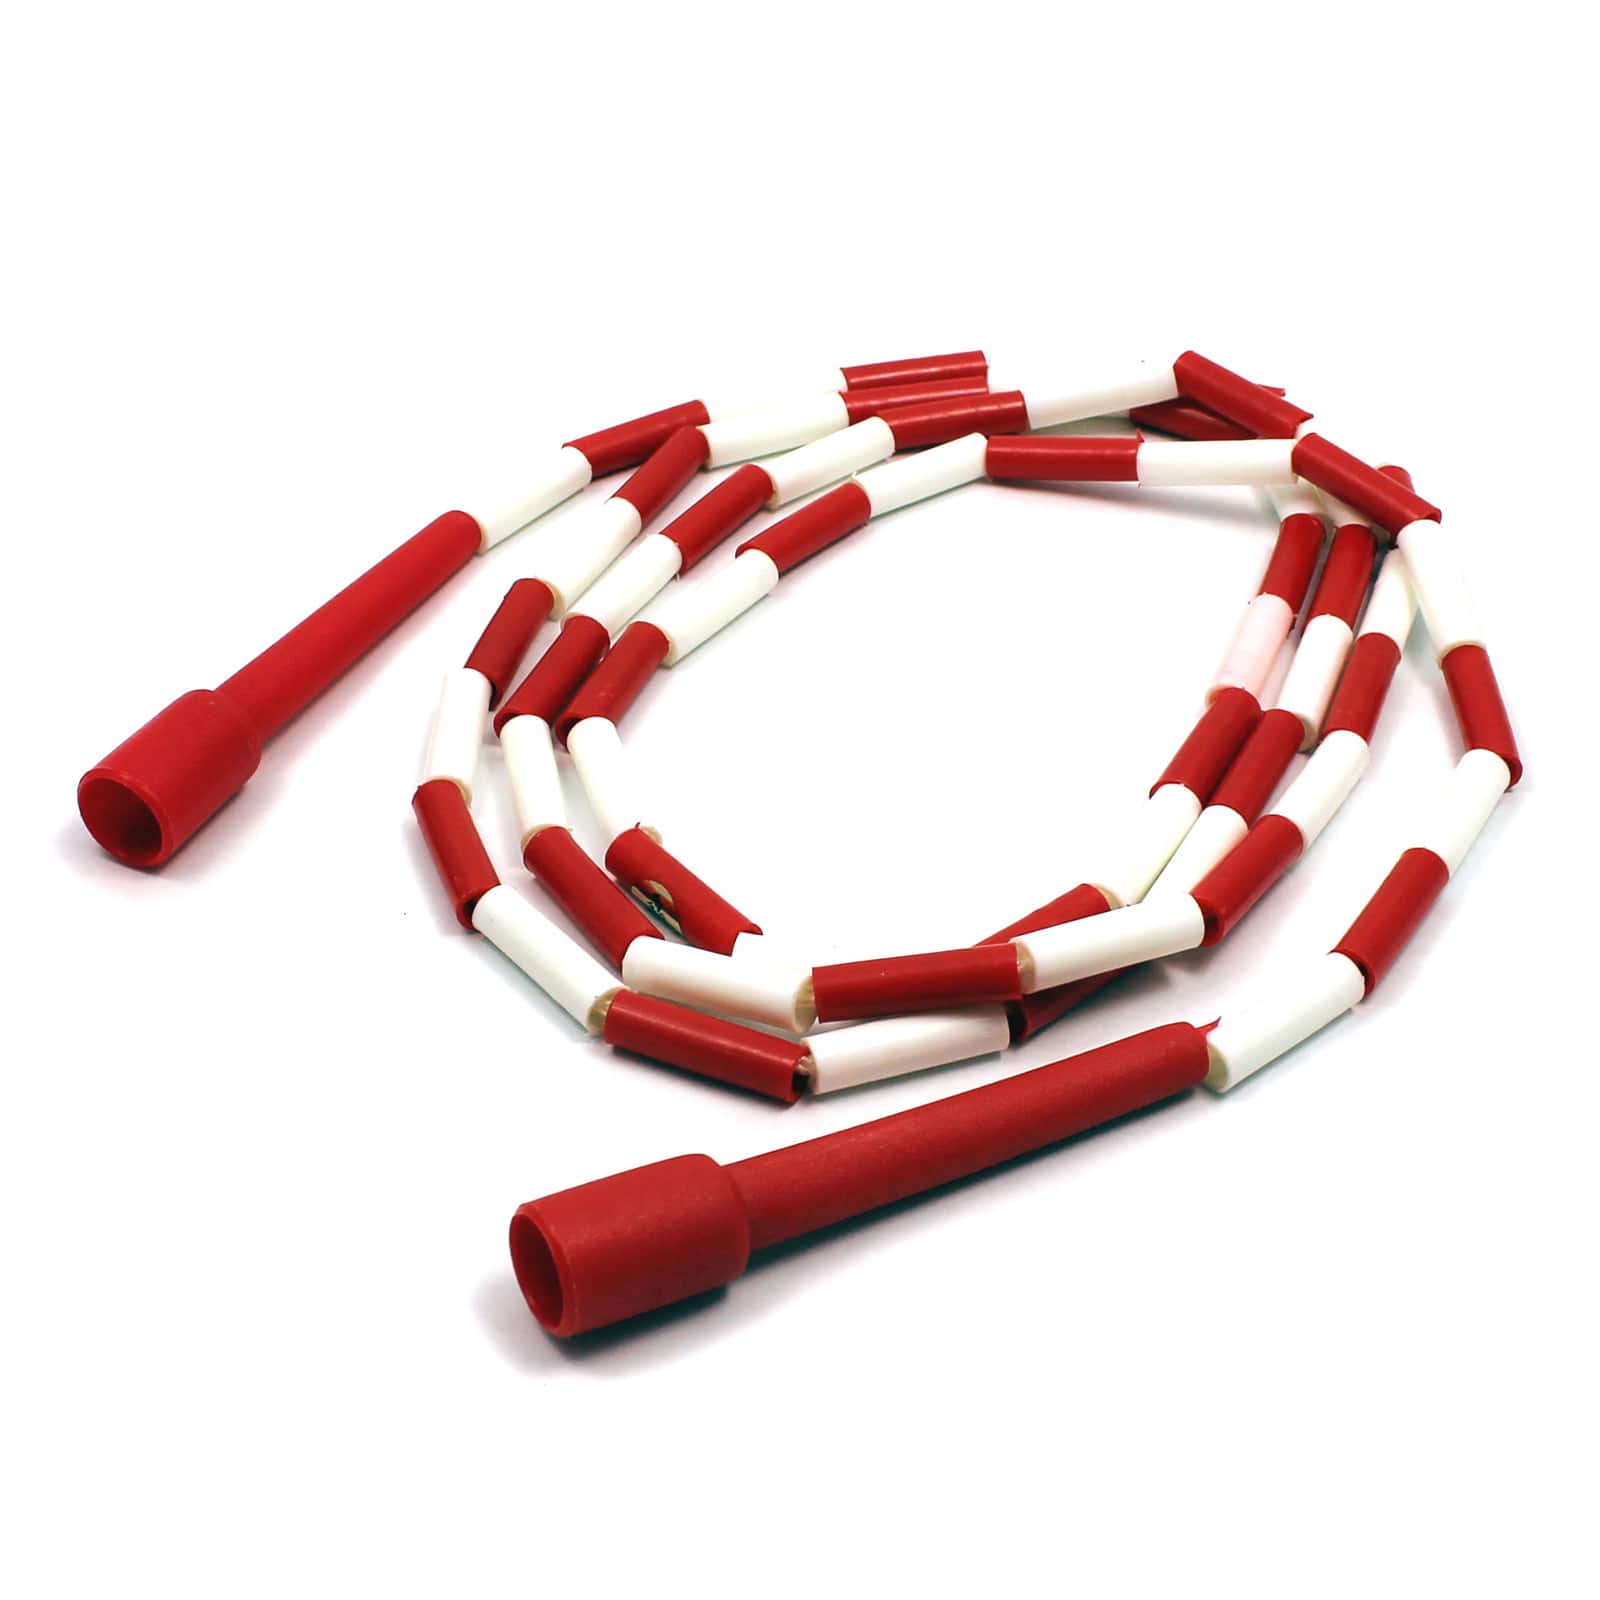 8ft. Red Segmented Plastic Jump Rope, 6 Pack